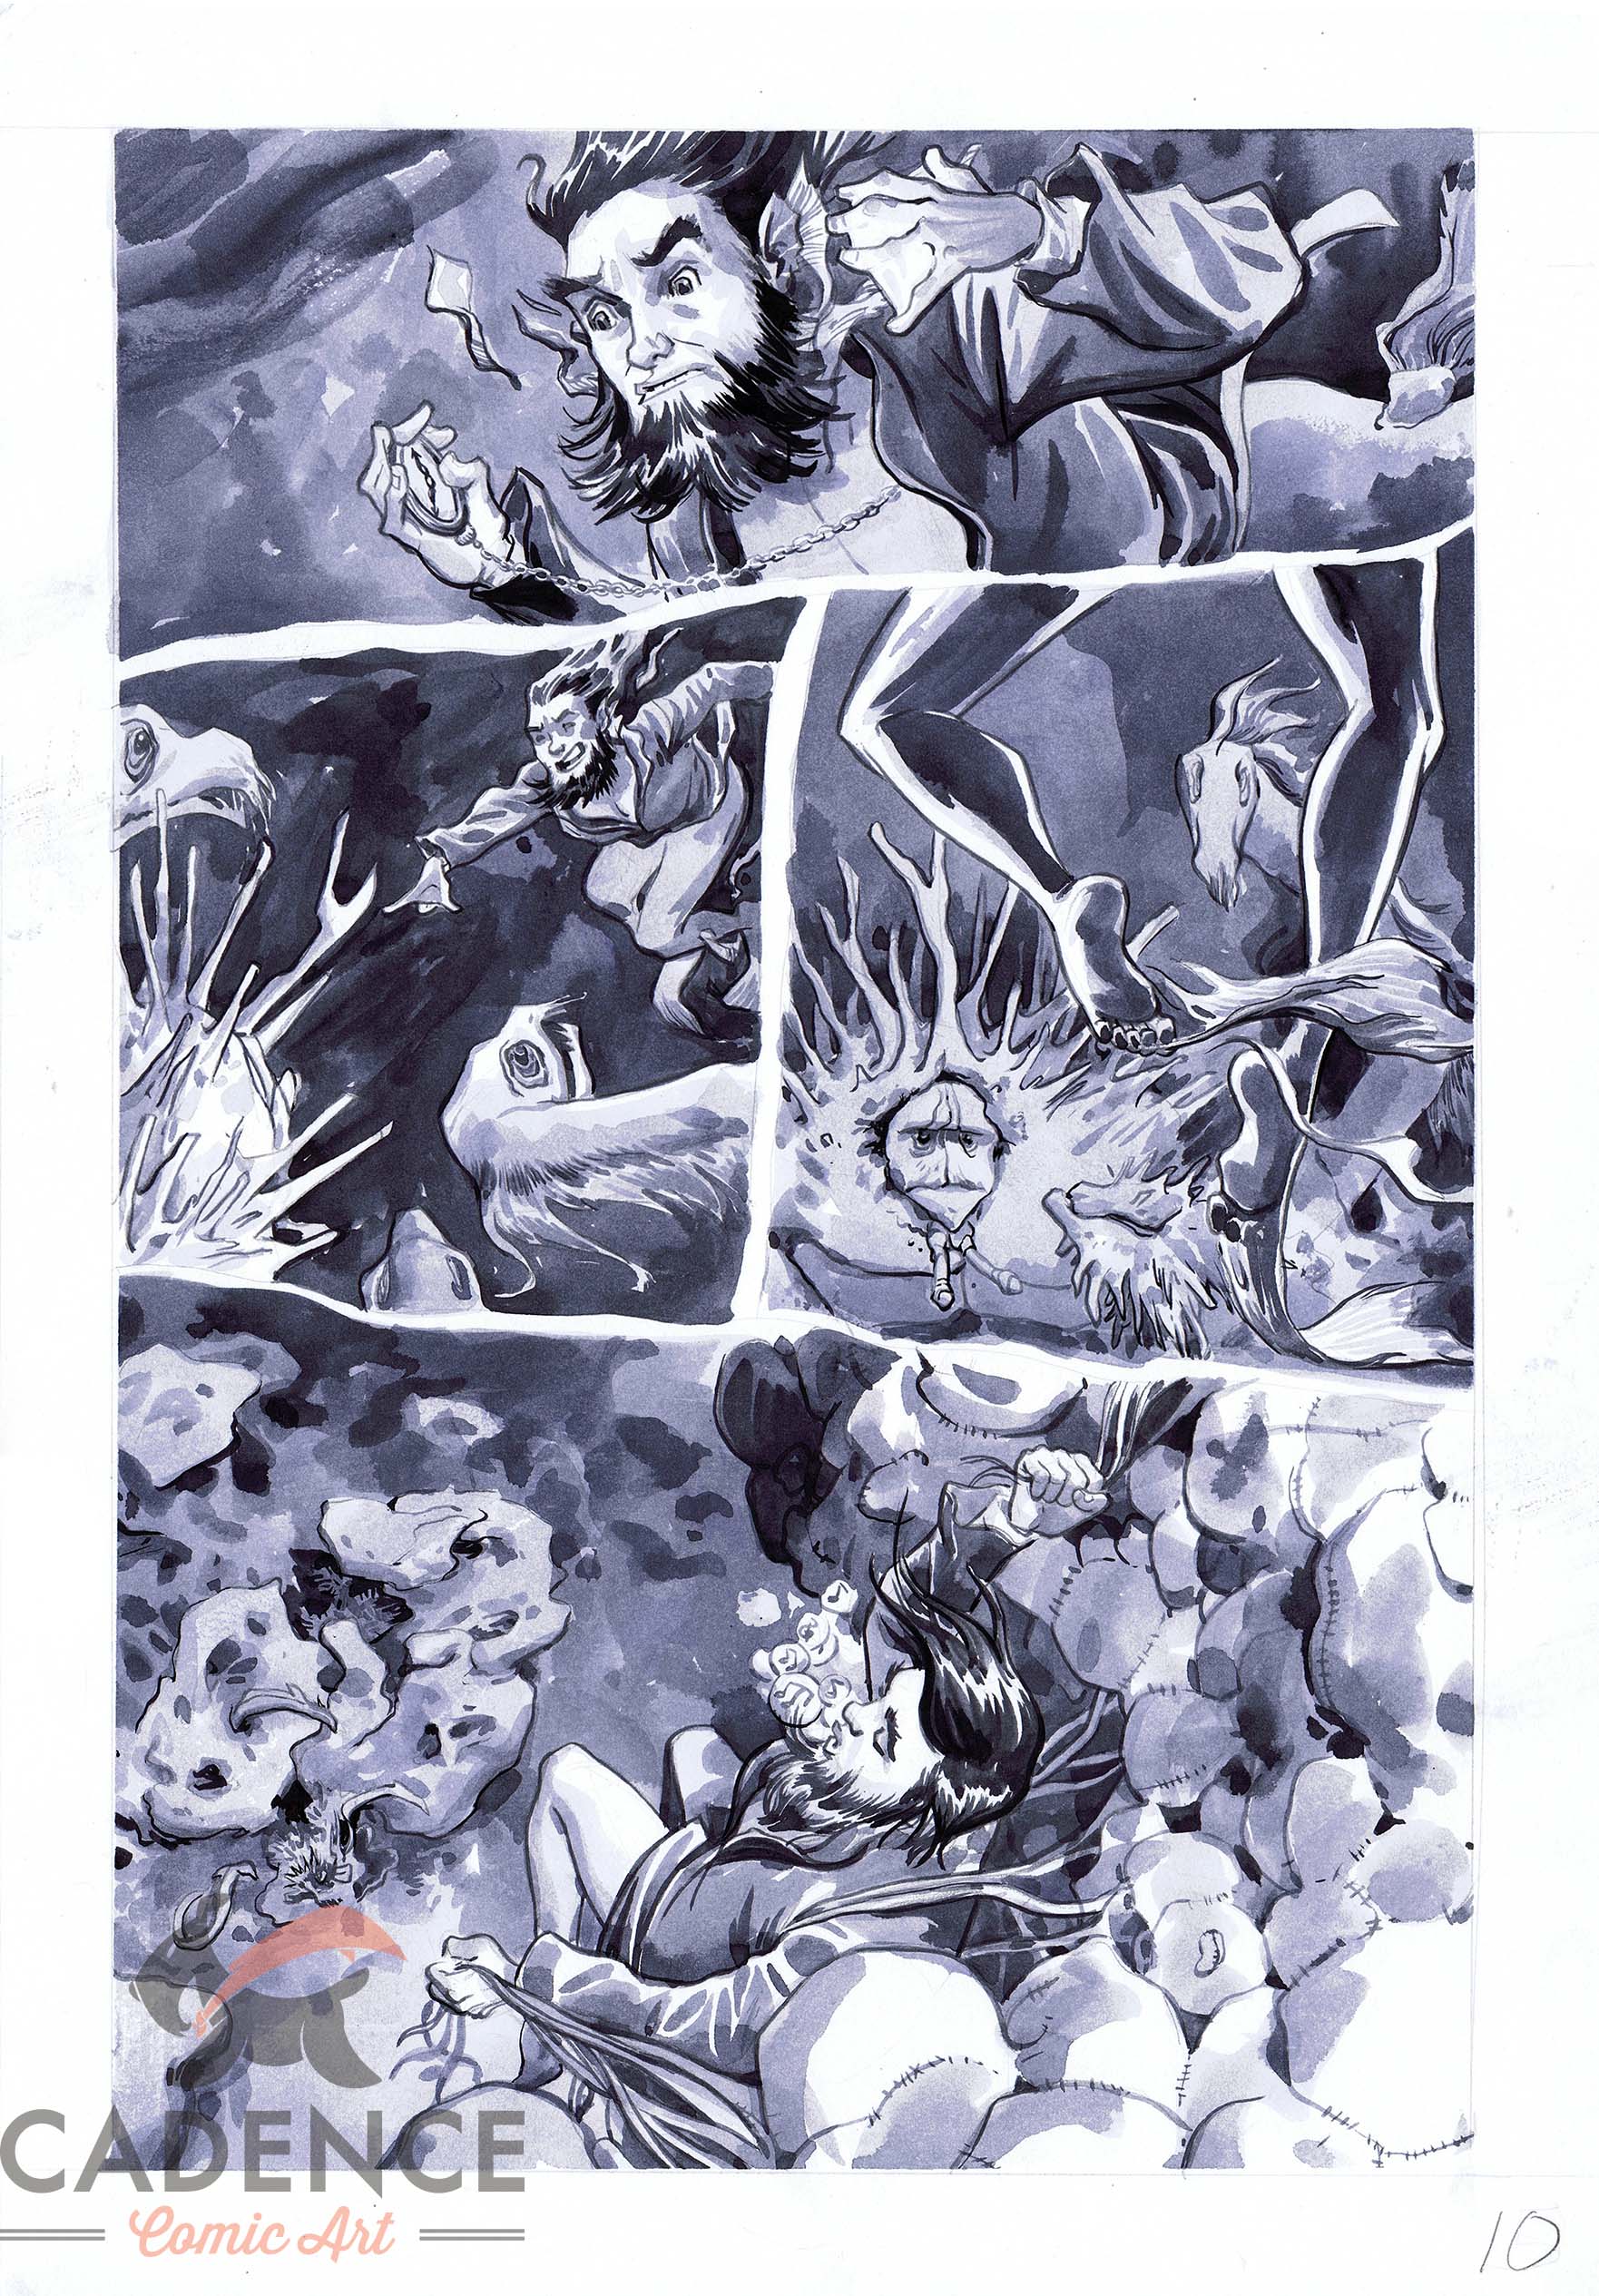 House of Mystery, Vol.2 (DC Comics) #02, Page  Comic Art